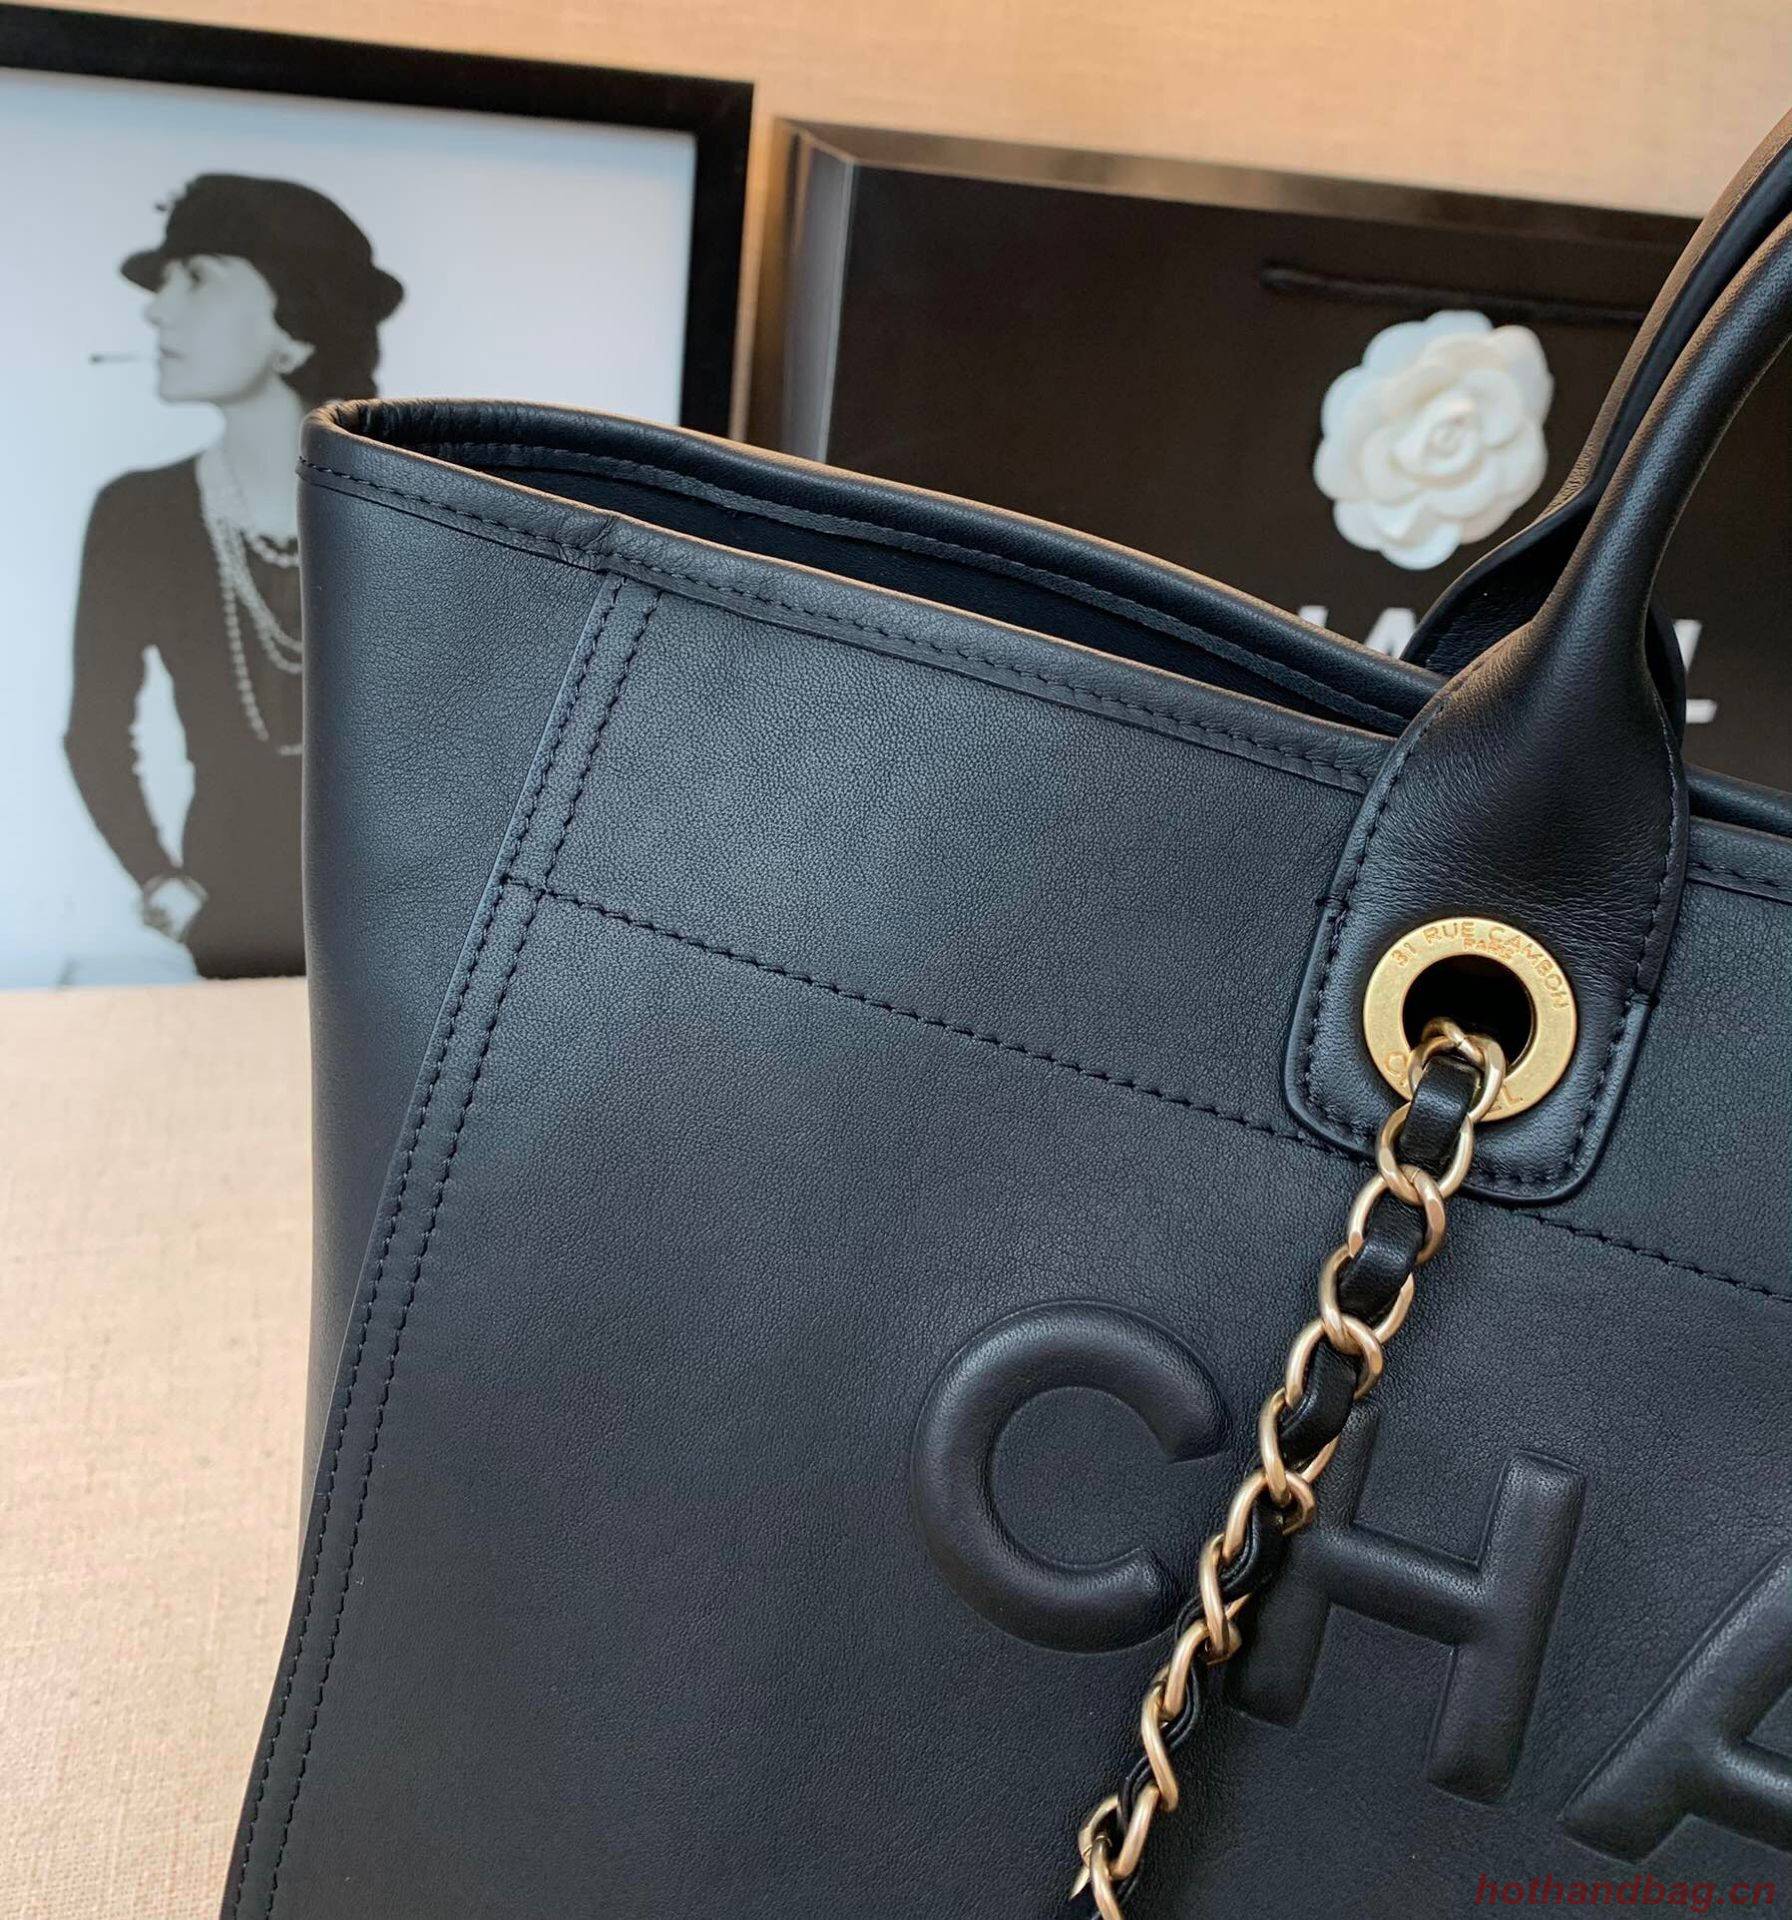 Chanel Original Leather Shopping Bag A66945 Black